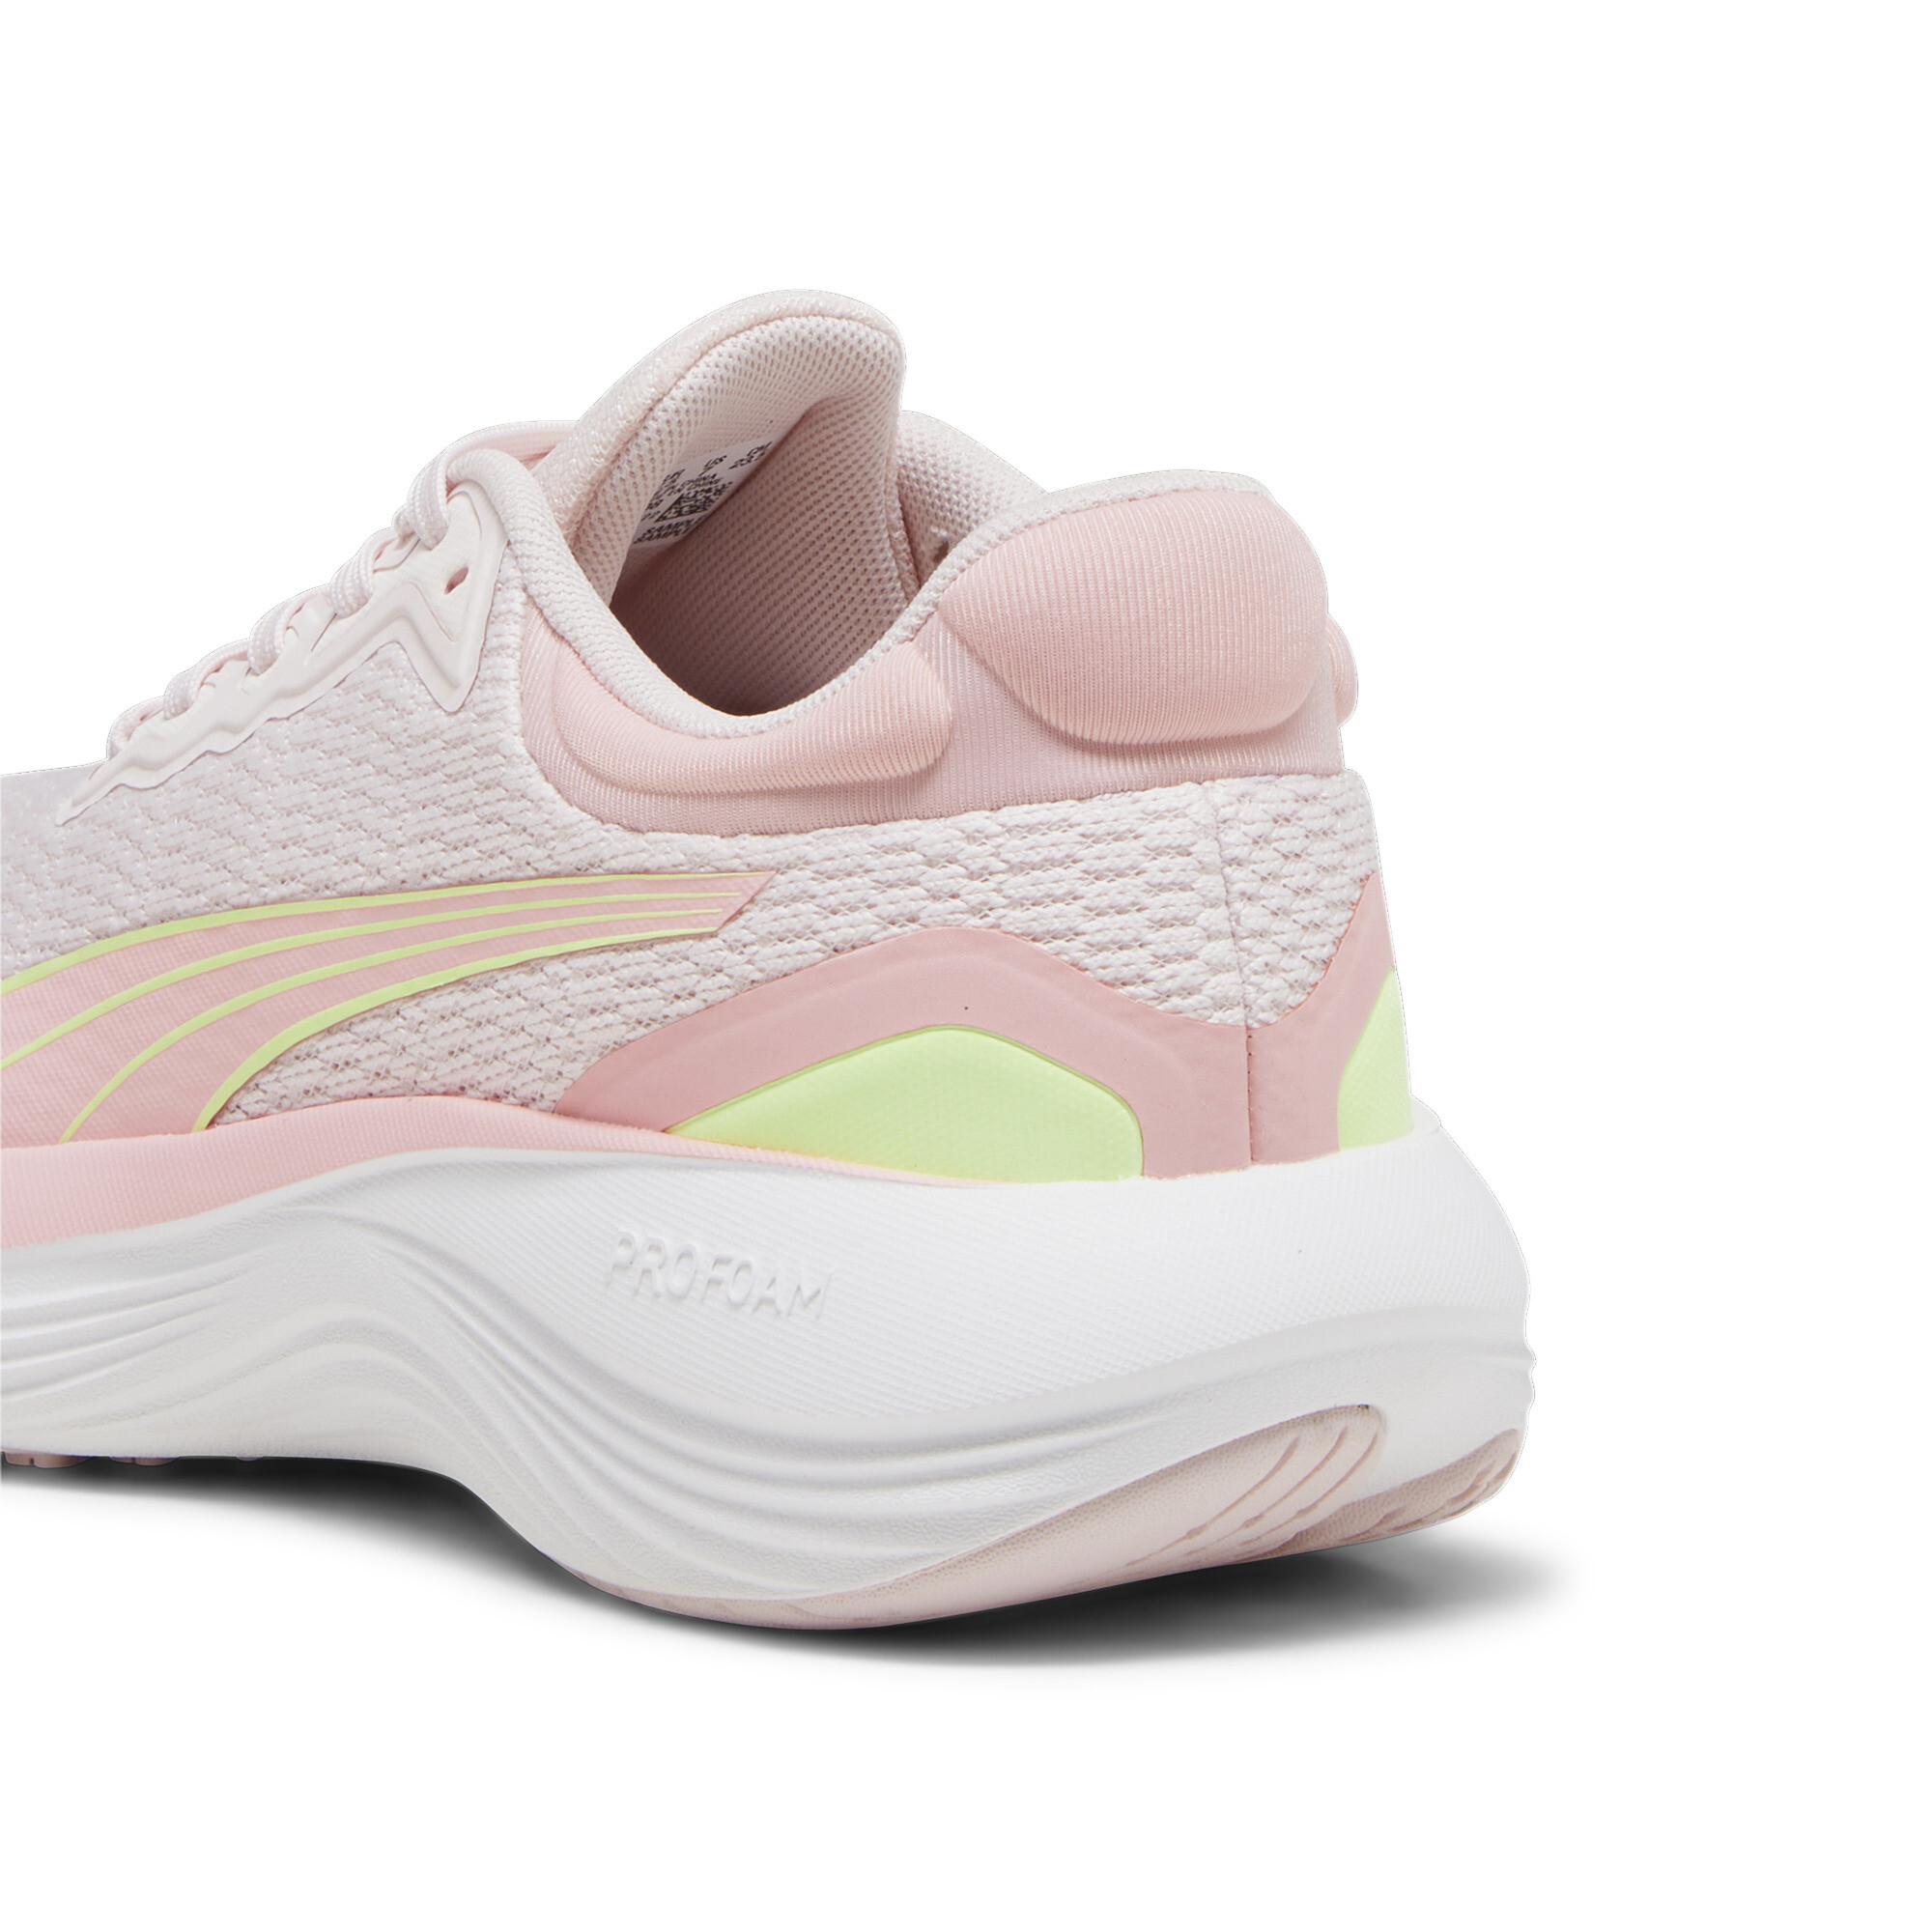 Men's PUMA Scend Pro Running Shoes In Pink, Size EU 42